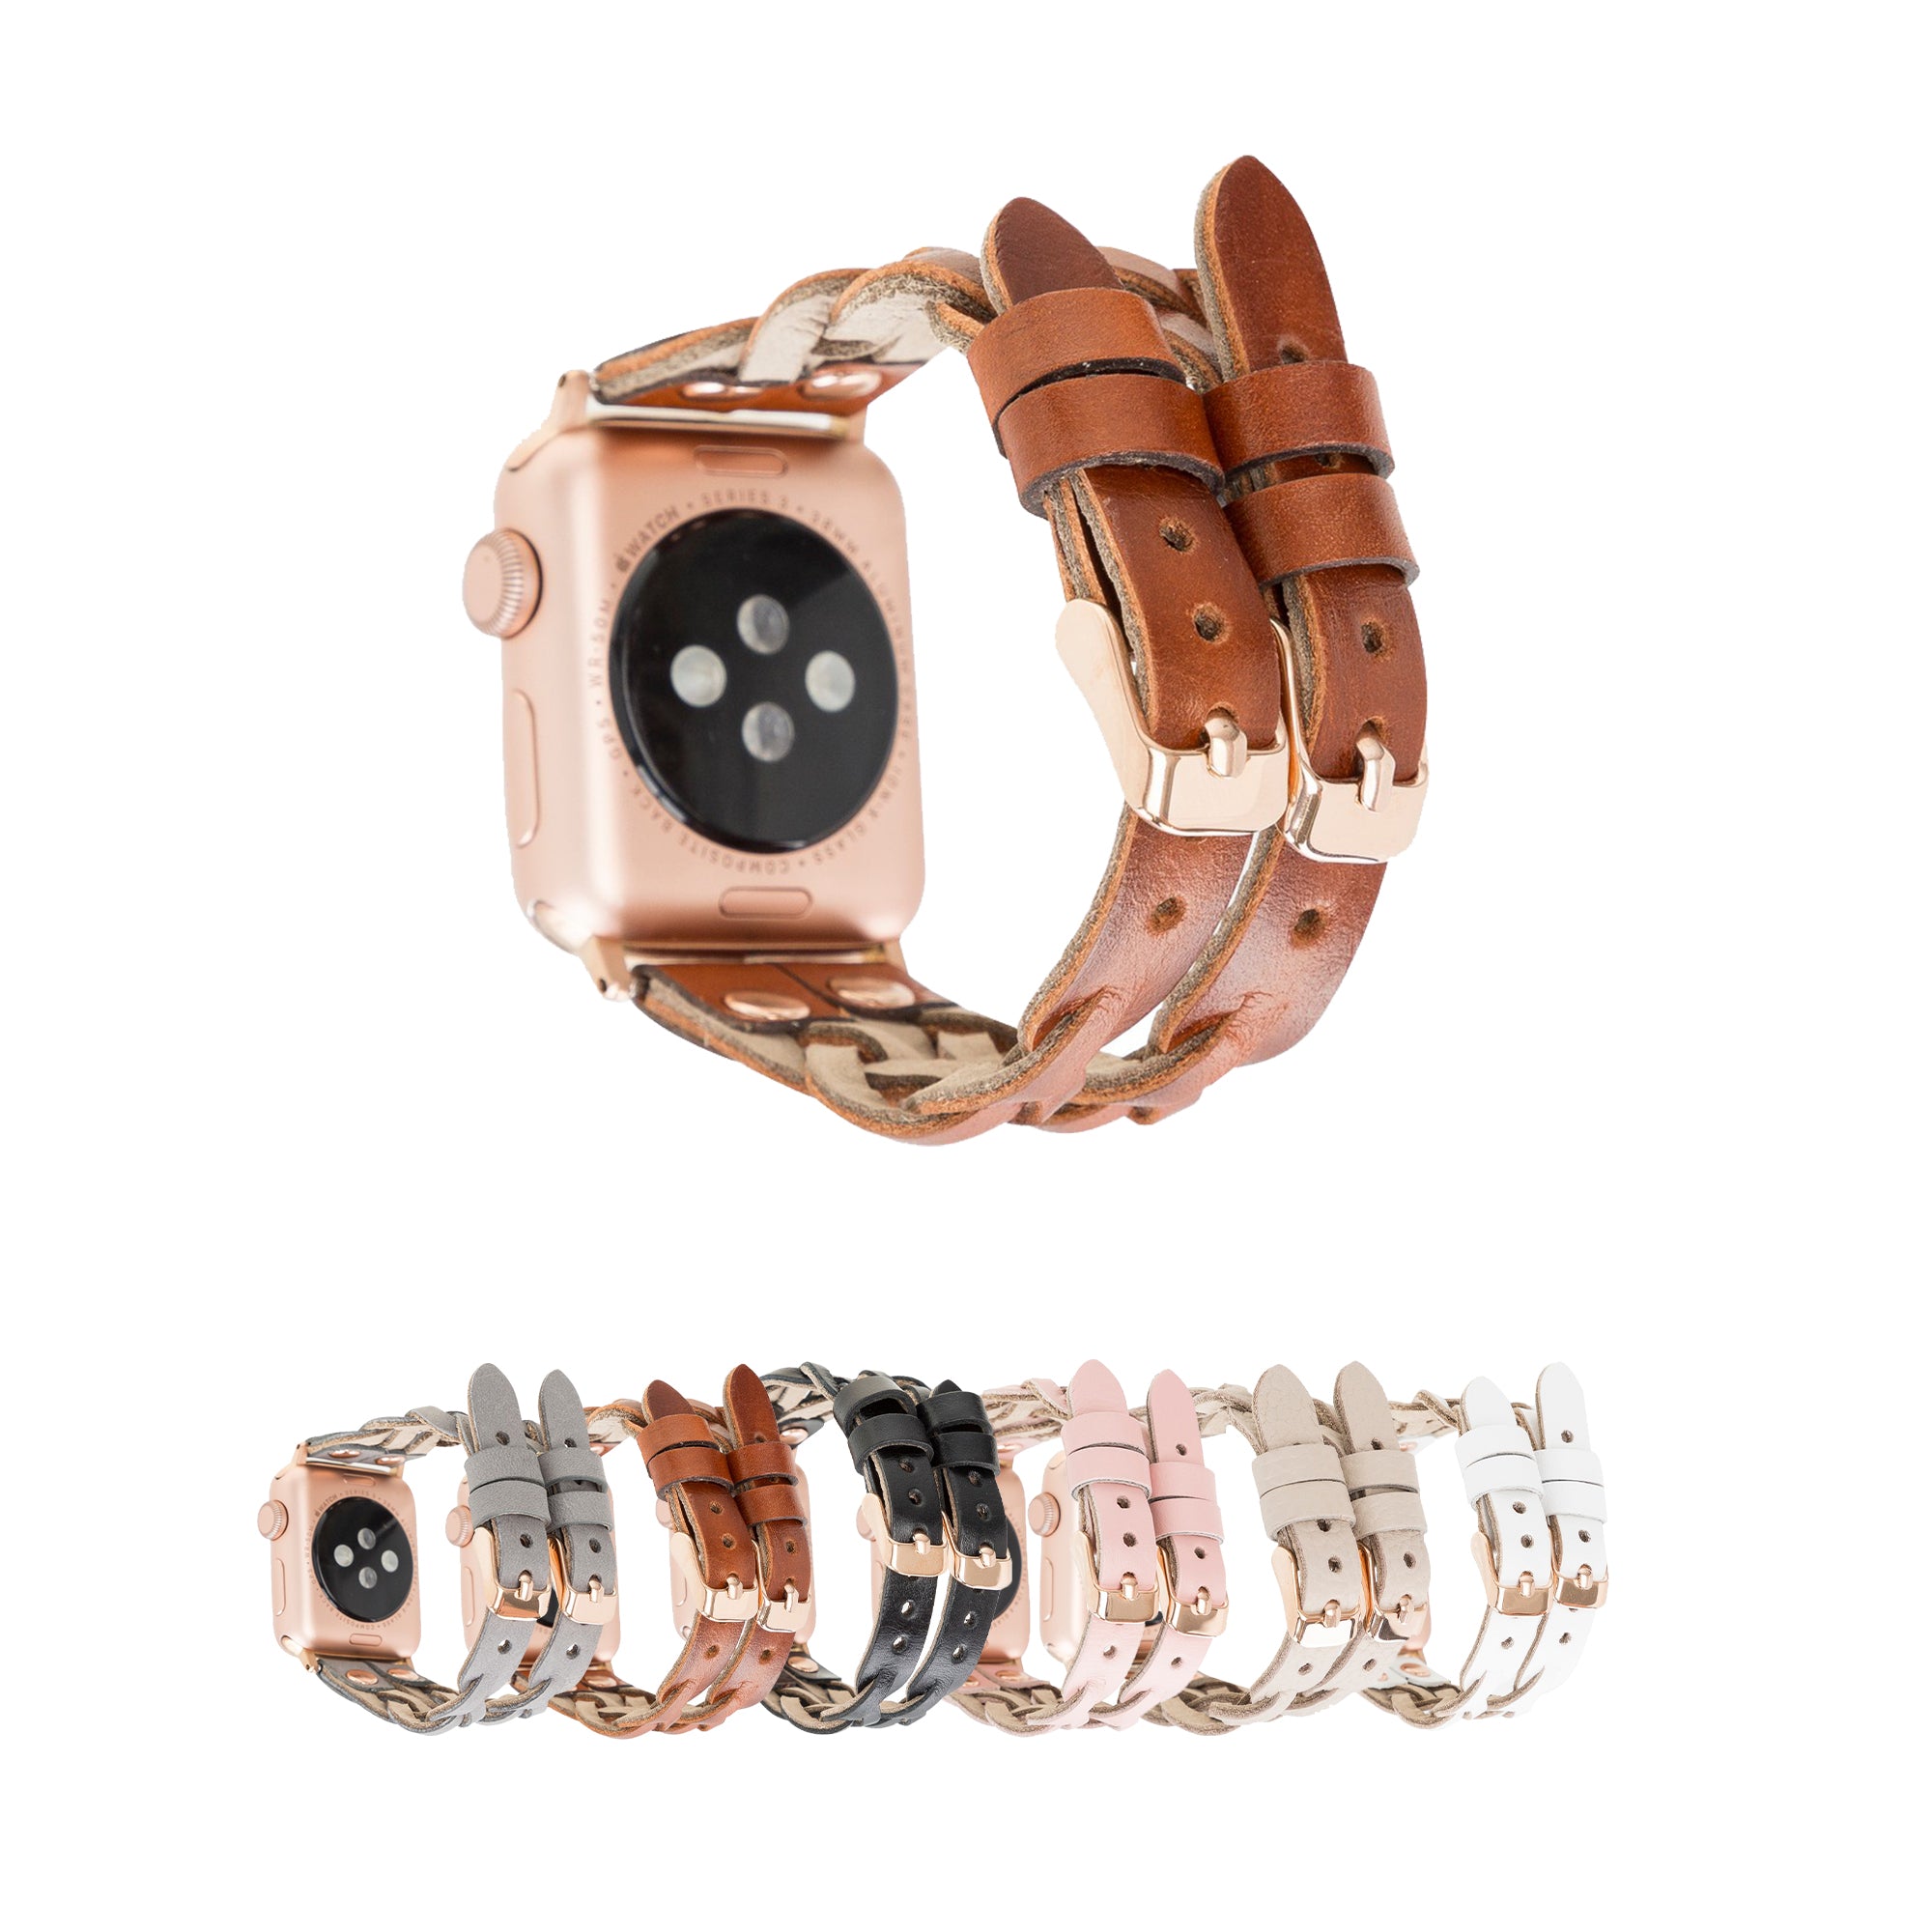 DelfiCase Sheffield-York Double Apple Watch Band for Apple Watch & Fitbit/Sense 32